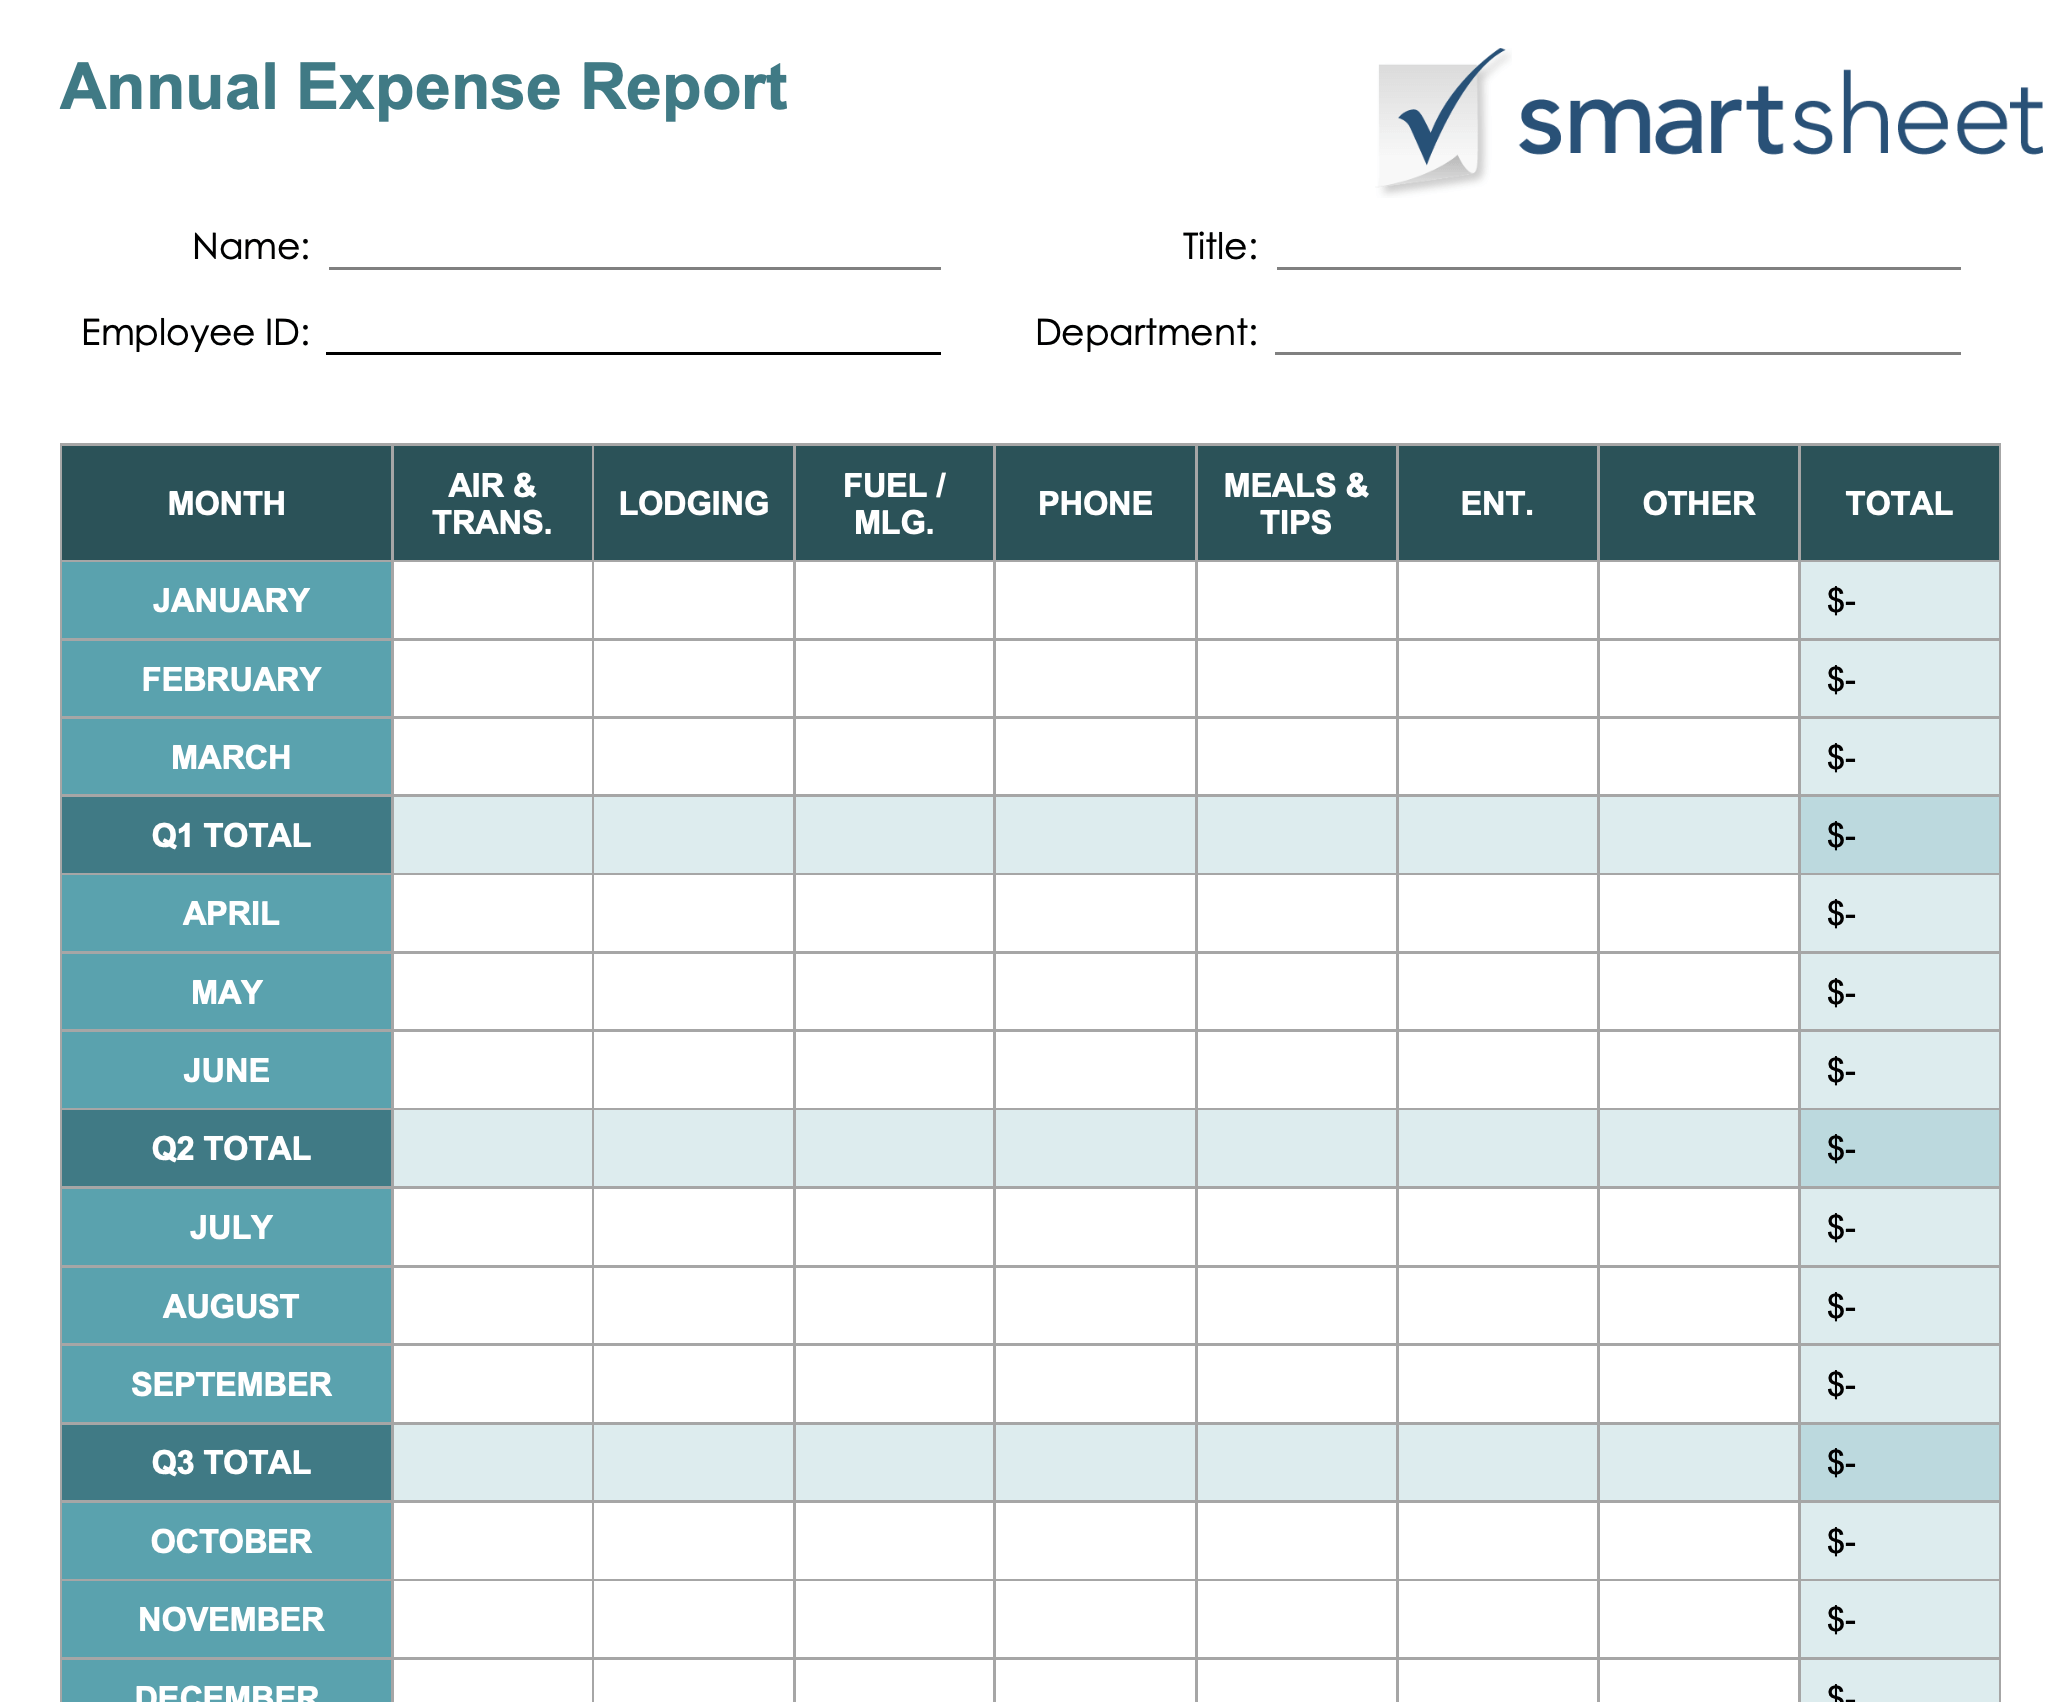 tabular report format in excel